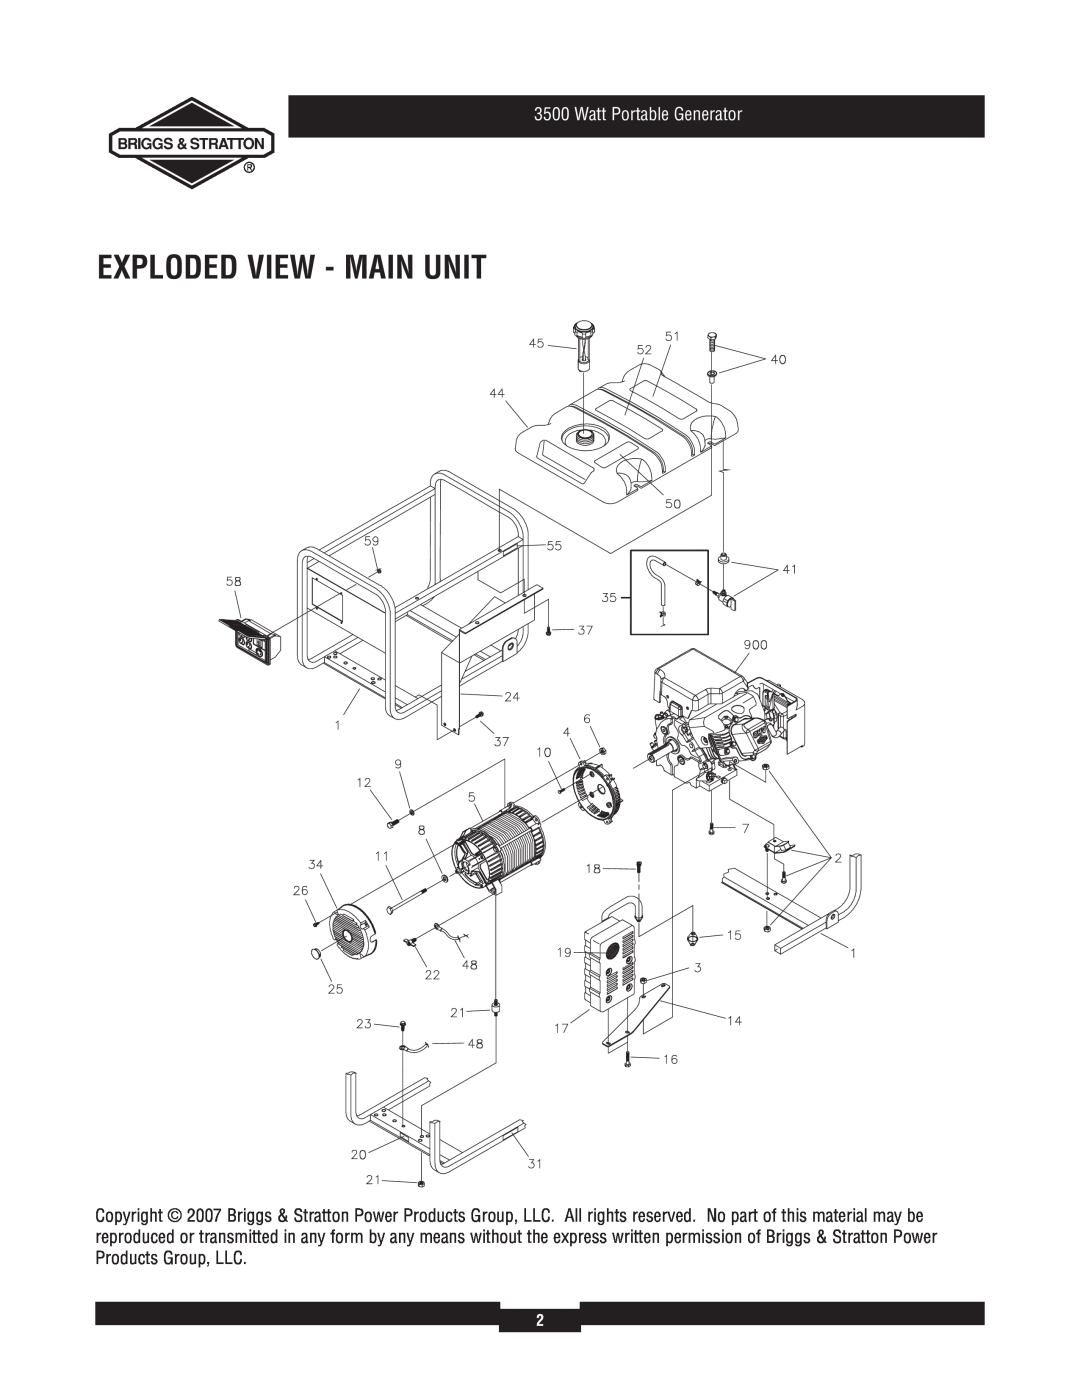 Briggs & Stratton 30218 manual Exploded View - Main Unit, Watt Portable Generator 